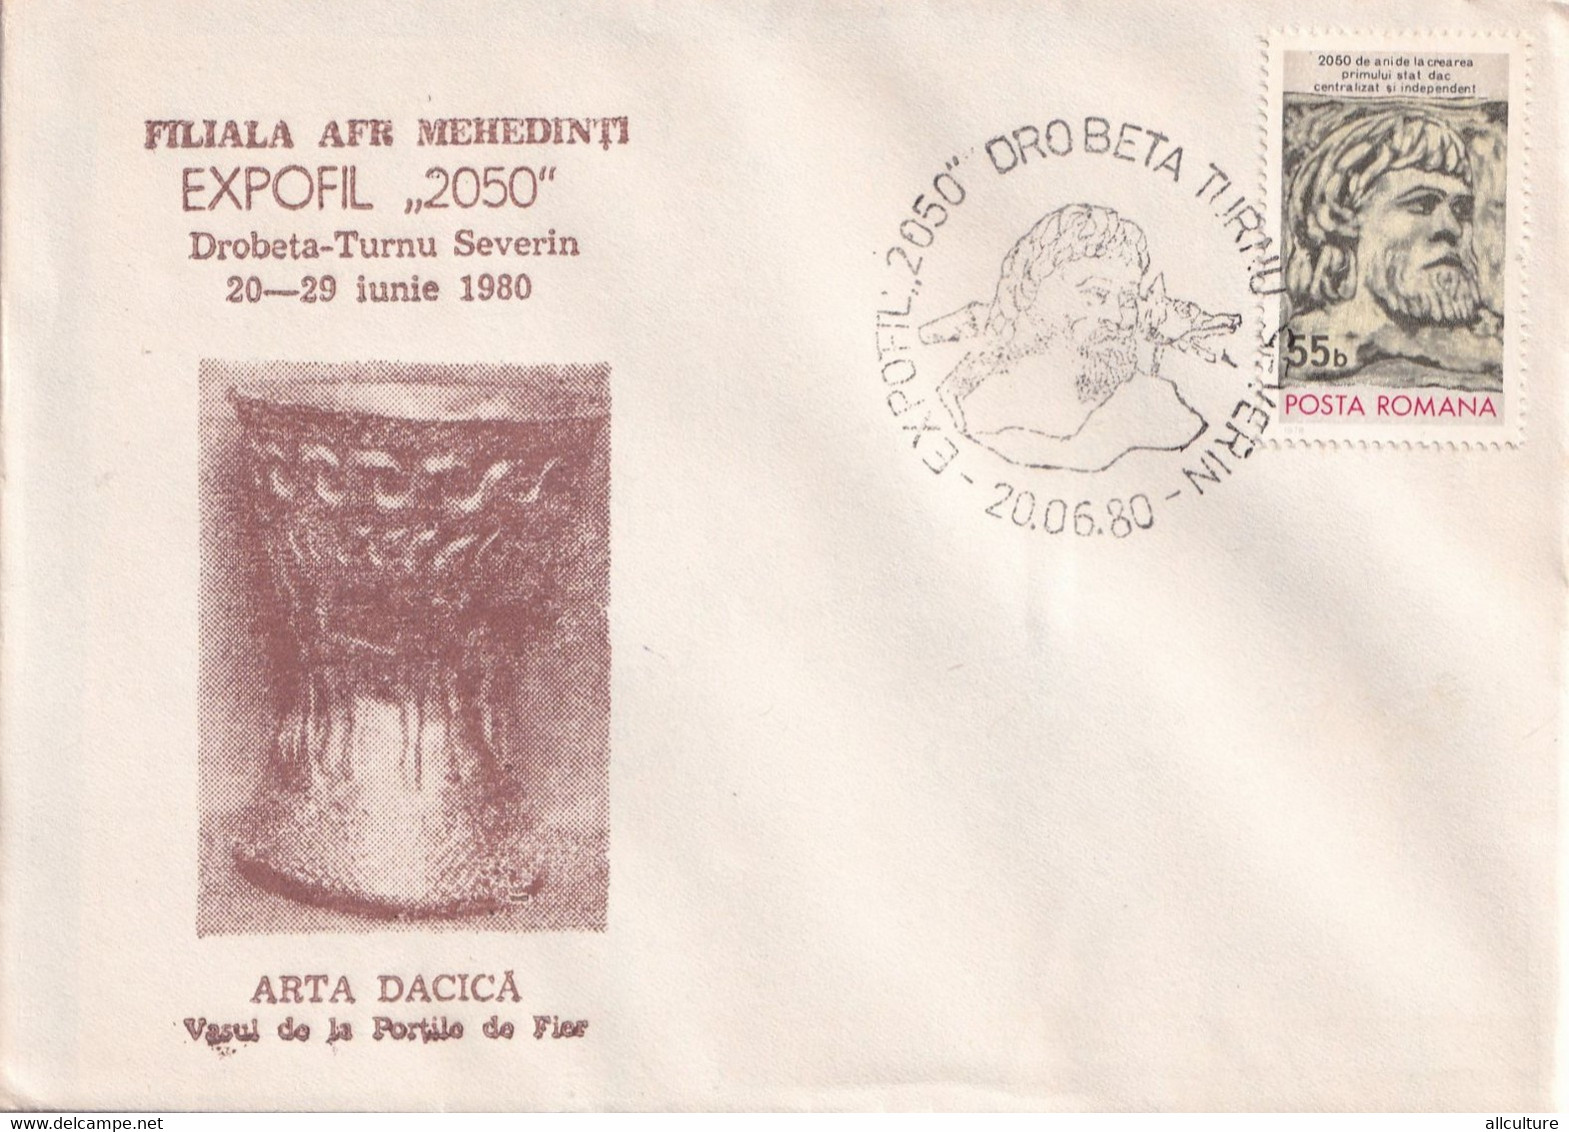 A2798 -  Expofil "2050" Filiala AFR Mehedinti, ARTA DACICA ,Drobeta Turnu-Severin 1980 Romania - Covers & Documents